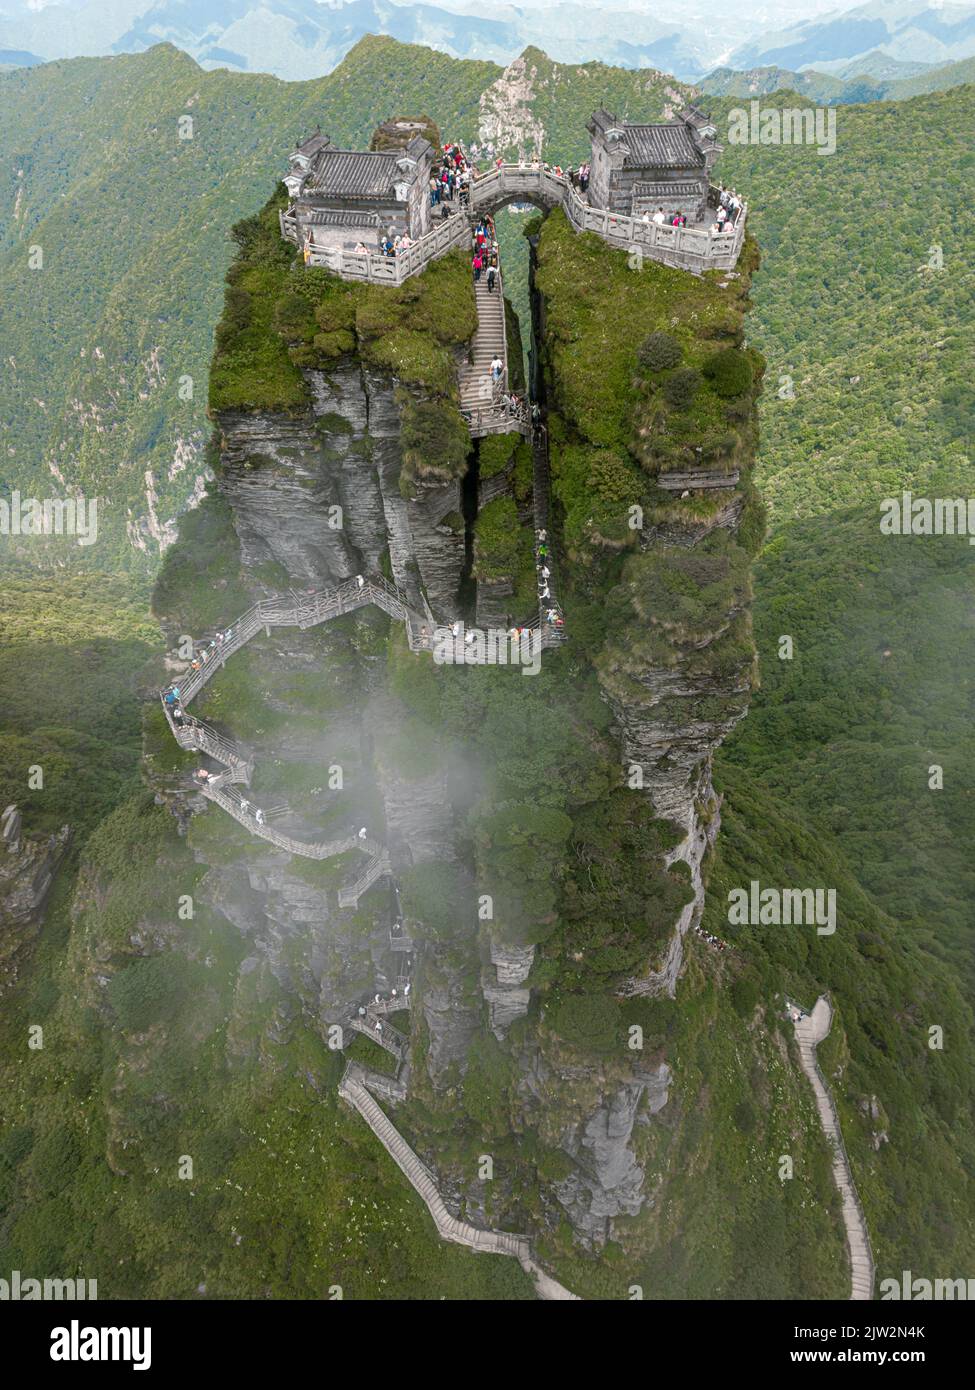 Der Fanjingshan oder der Berg Fanjing in Tongren, Provinz Guizhou, ist der höchste Gipfel des Wuling-Gebirges im Südwesten Chinas. Fanjingshan Stockfoto